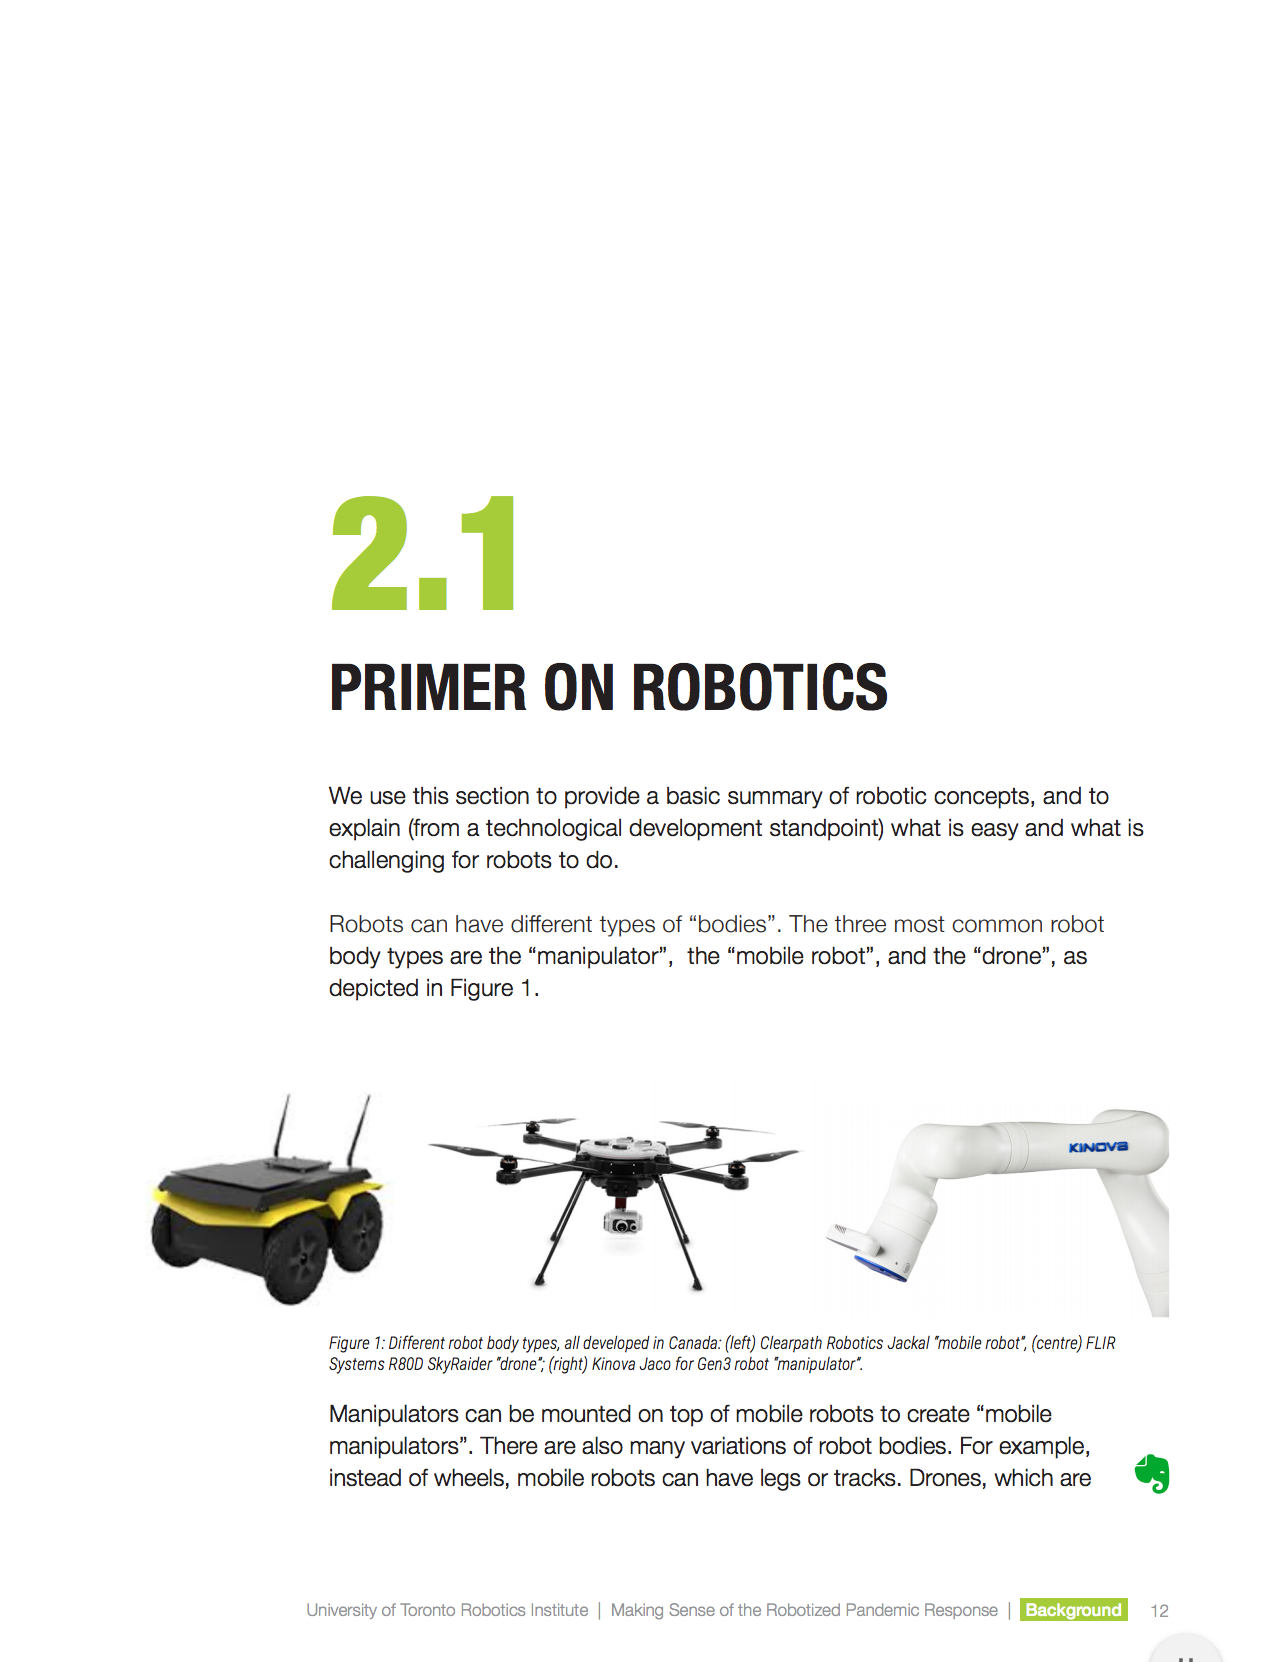 Primer on Robotics